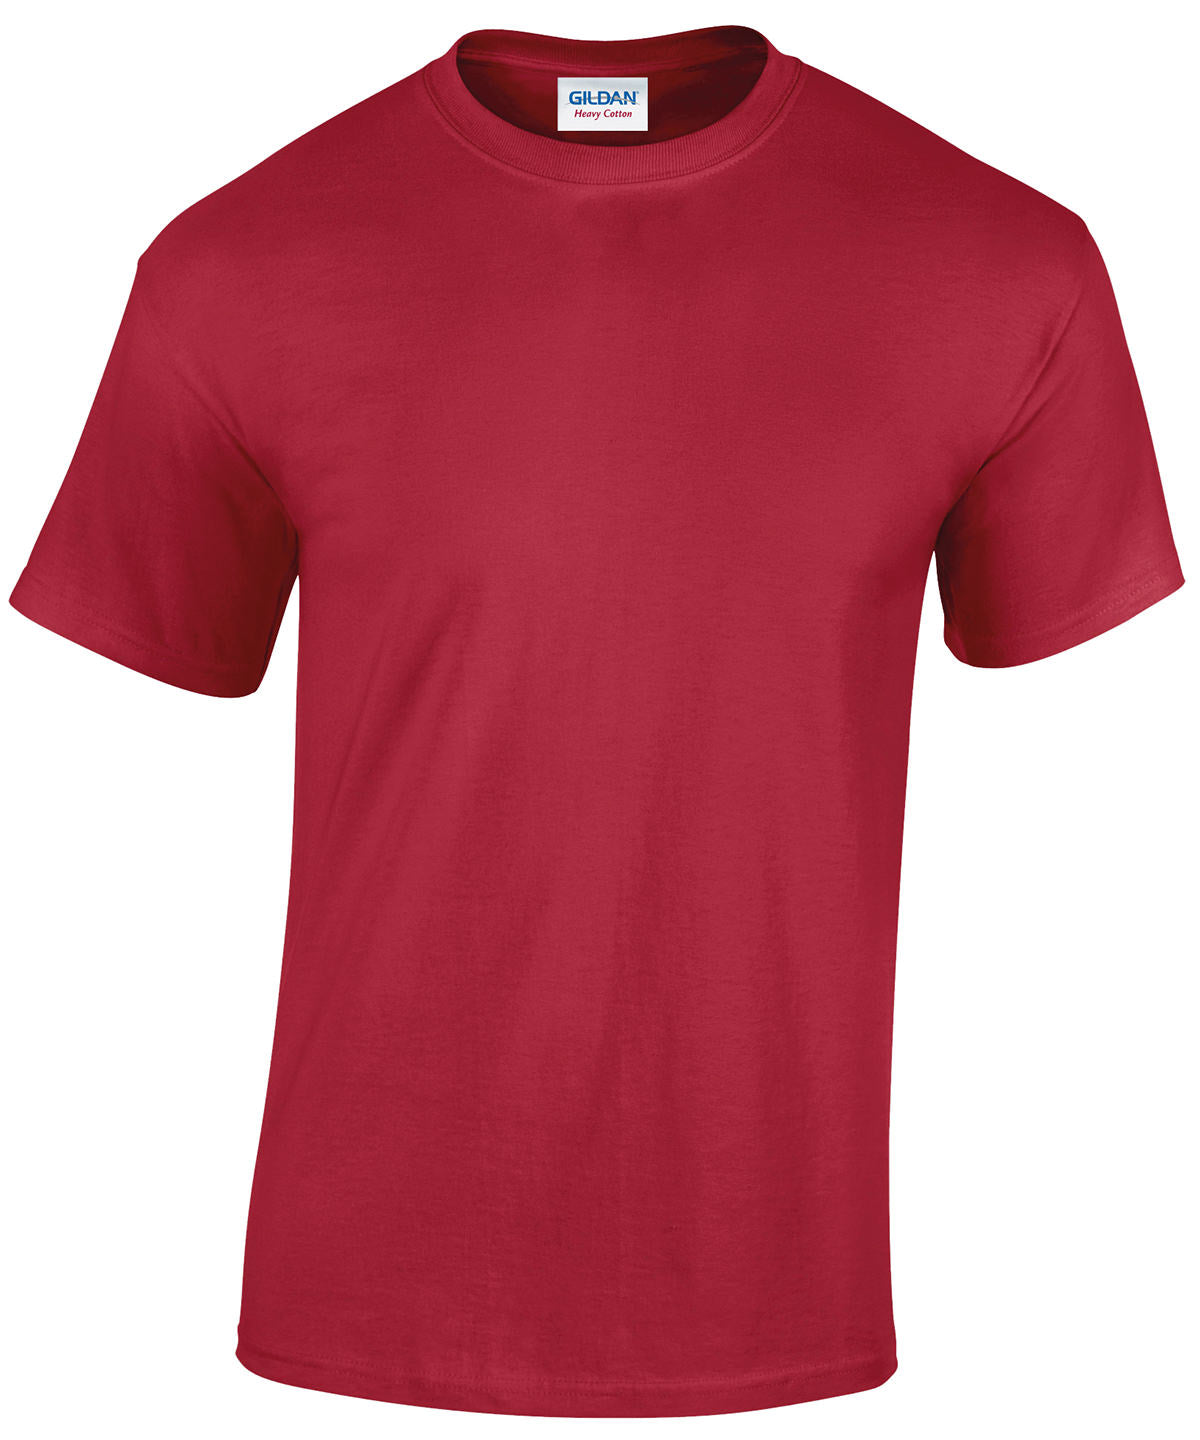 Personalised T-Shirts - Dark Purple Gildan Heavy Cotton™ adult t-shirt